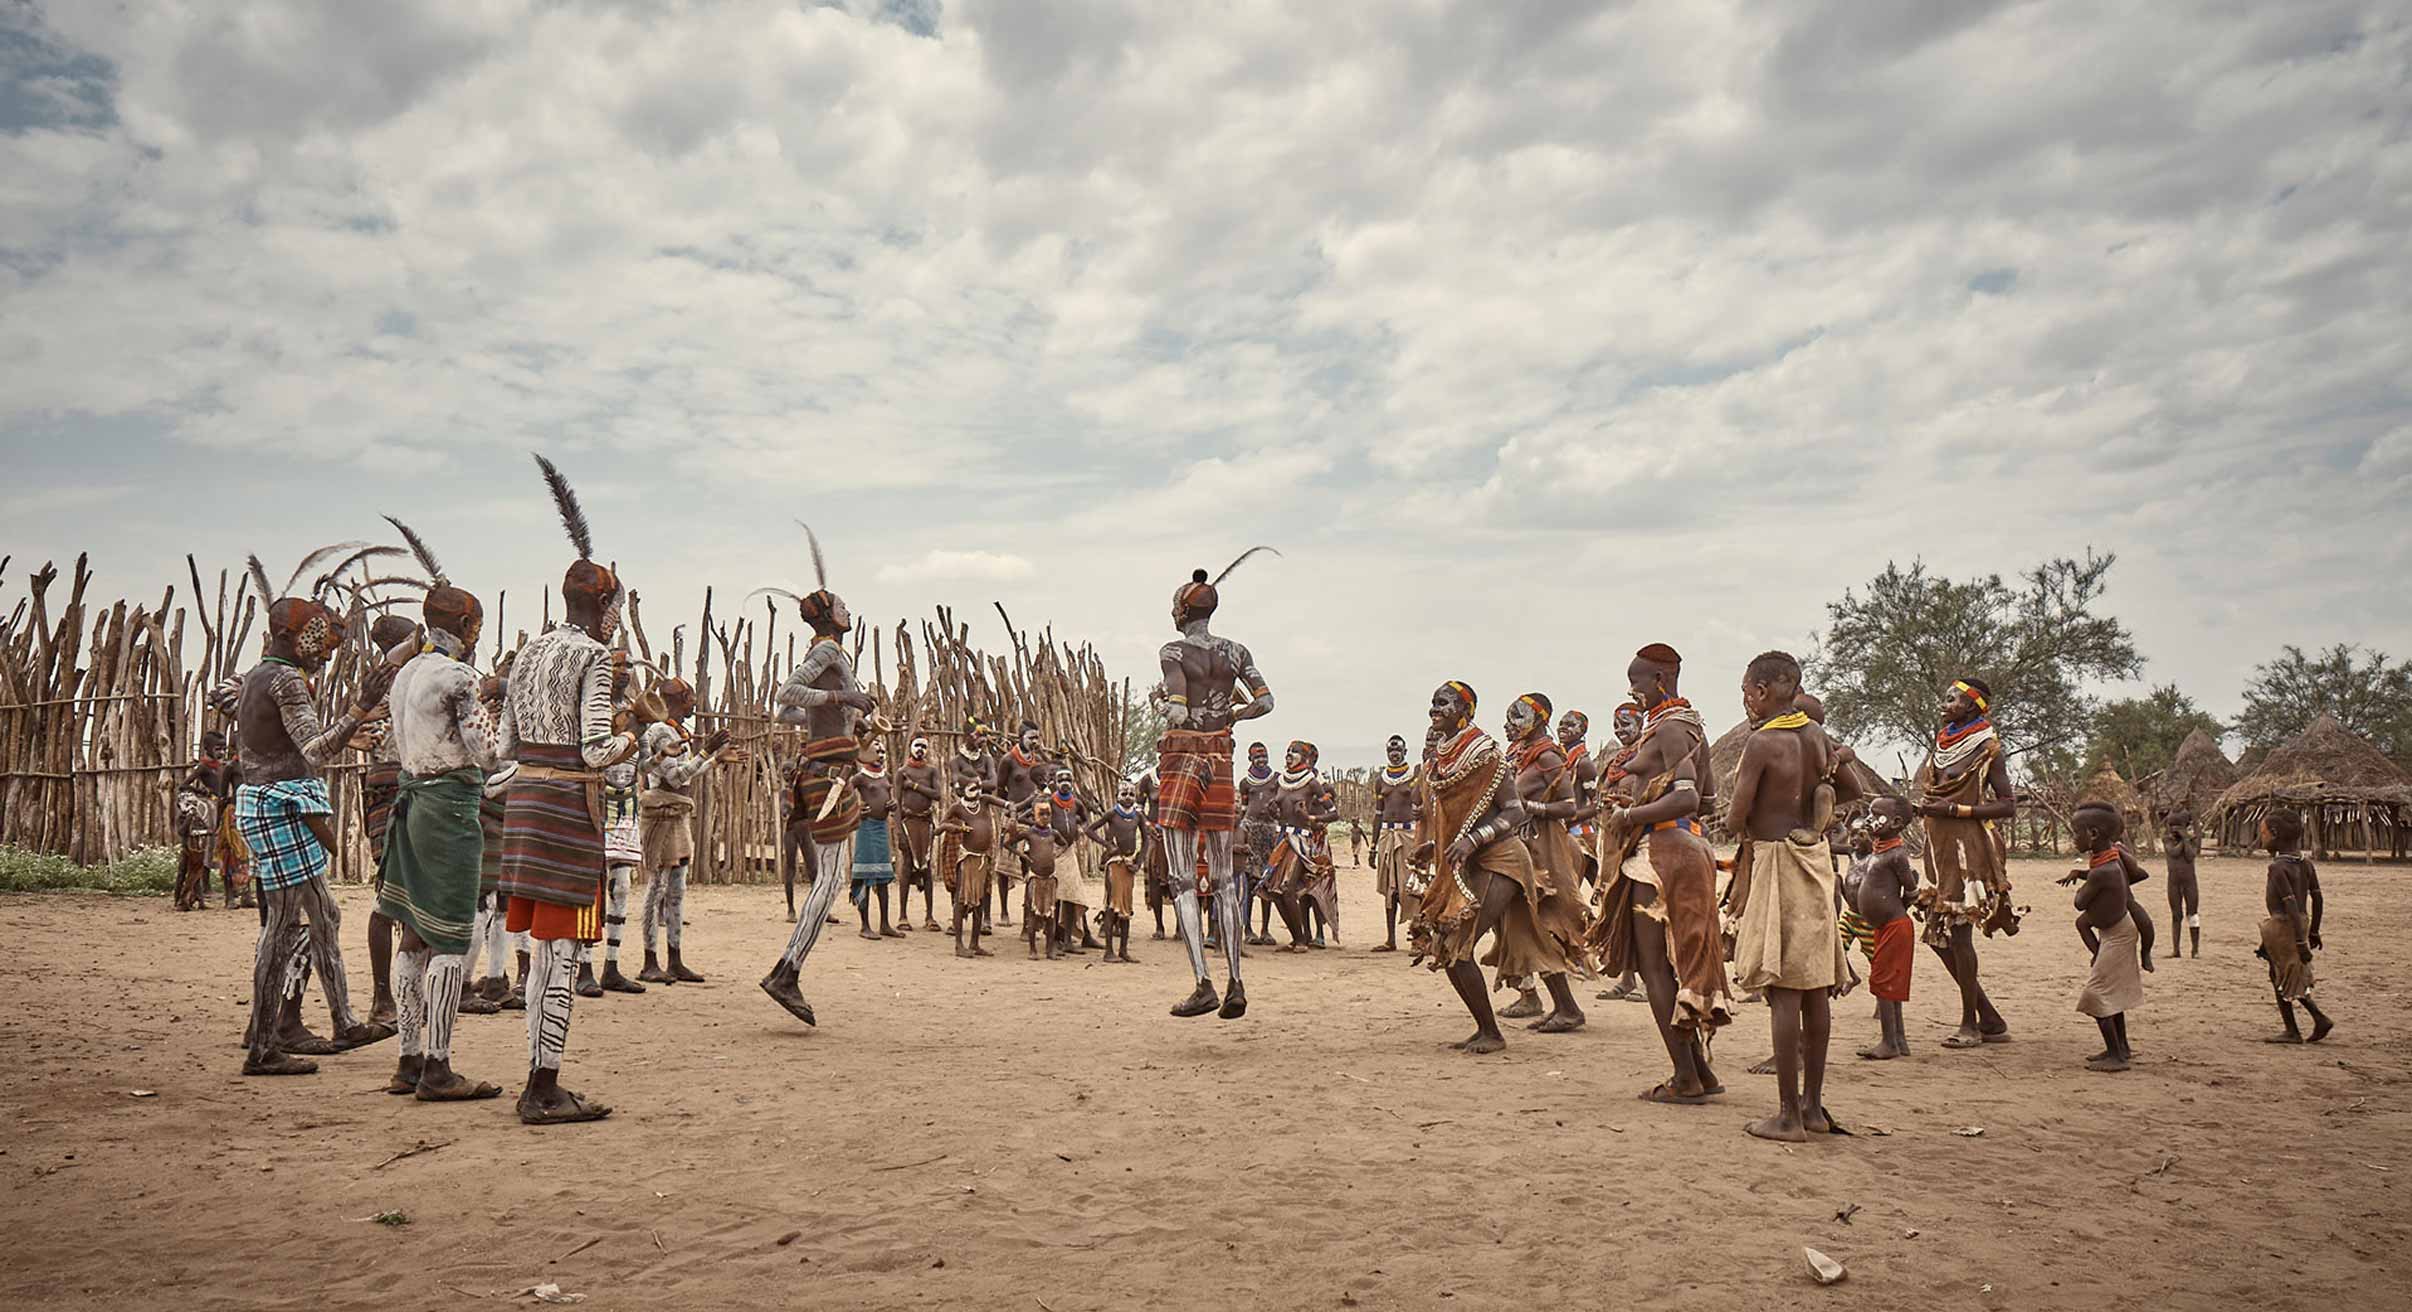 Kara tribe in Omo Valley dancing, Ethiopia